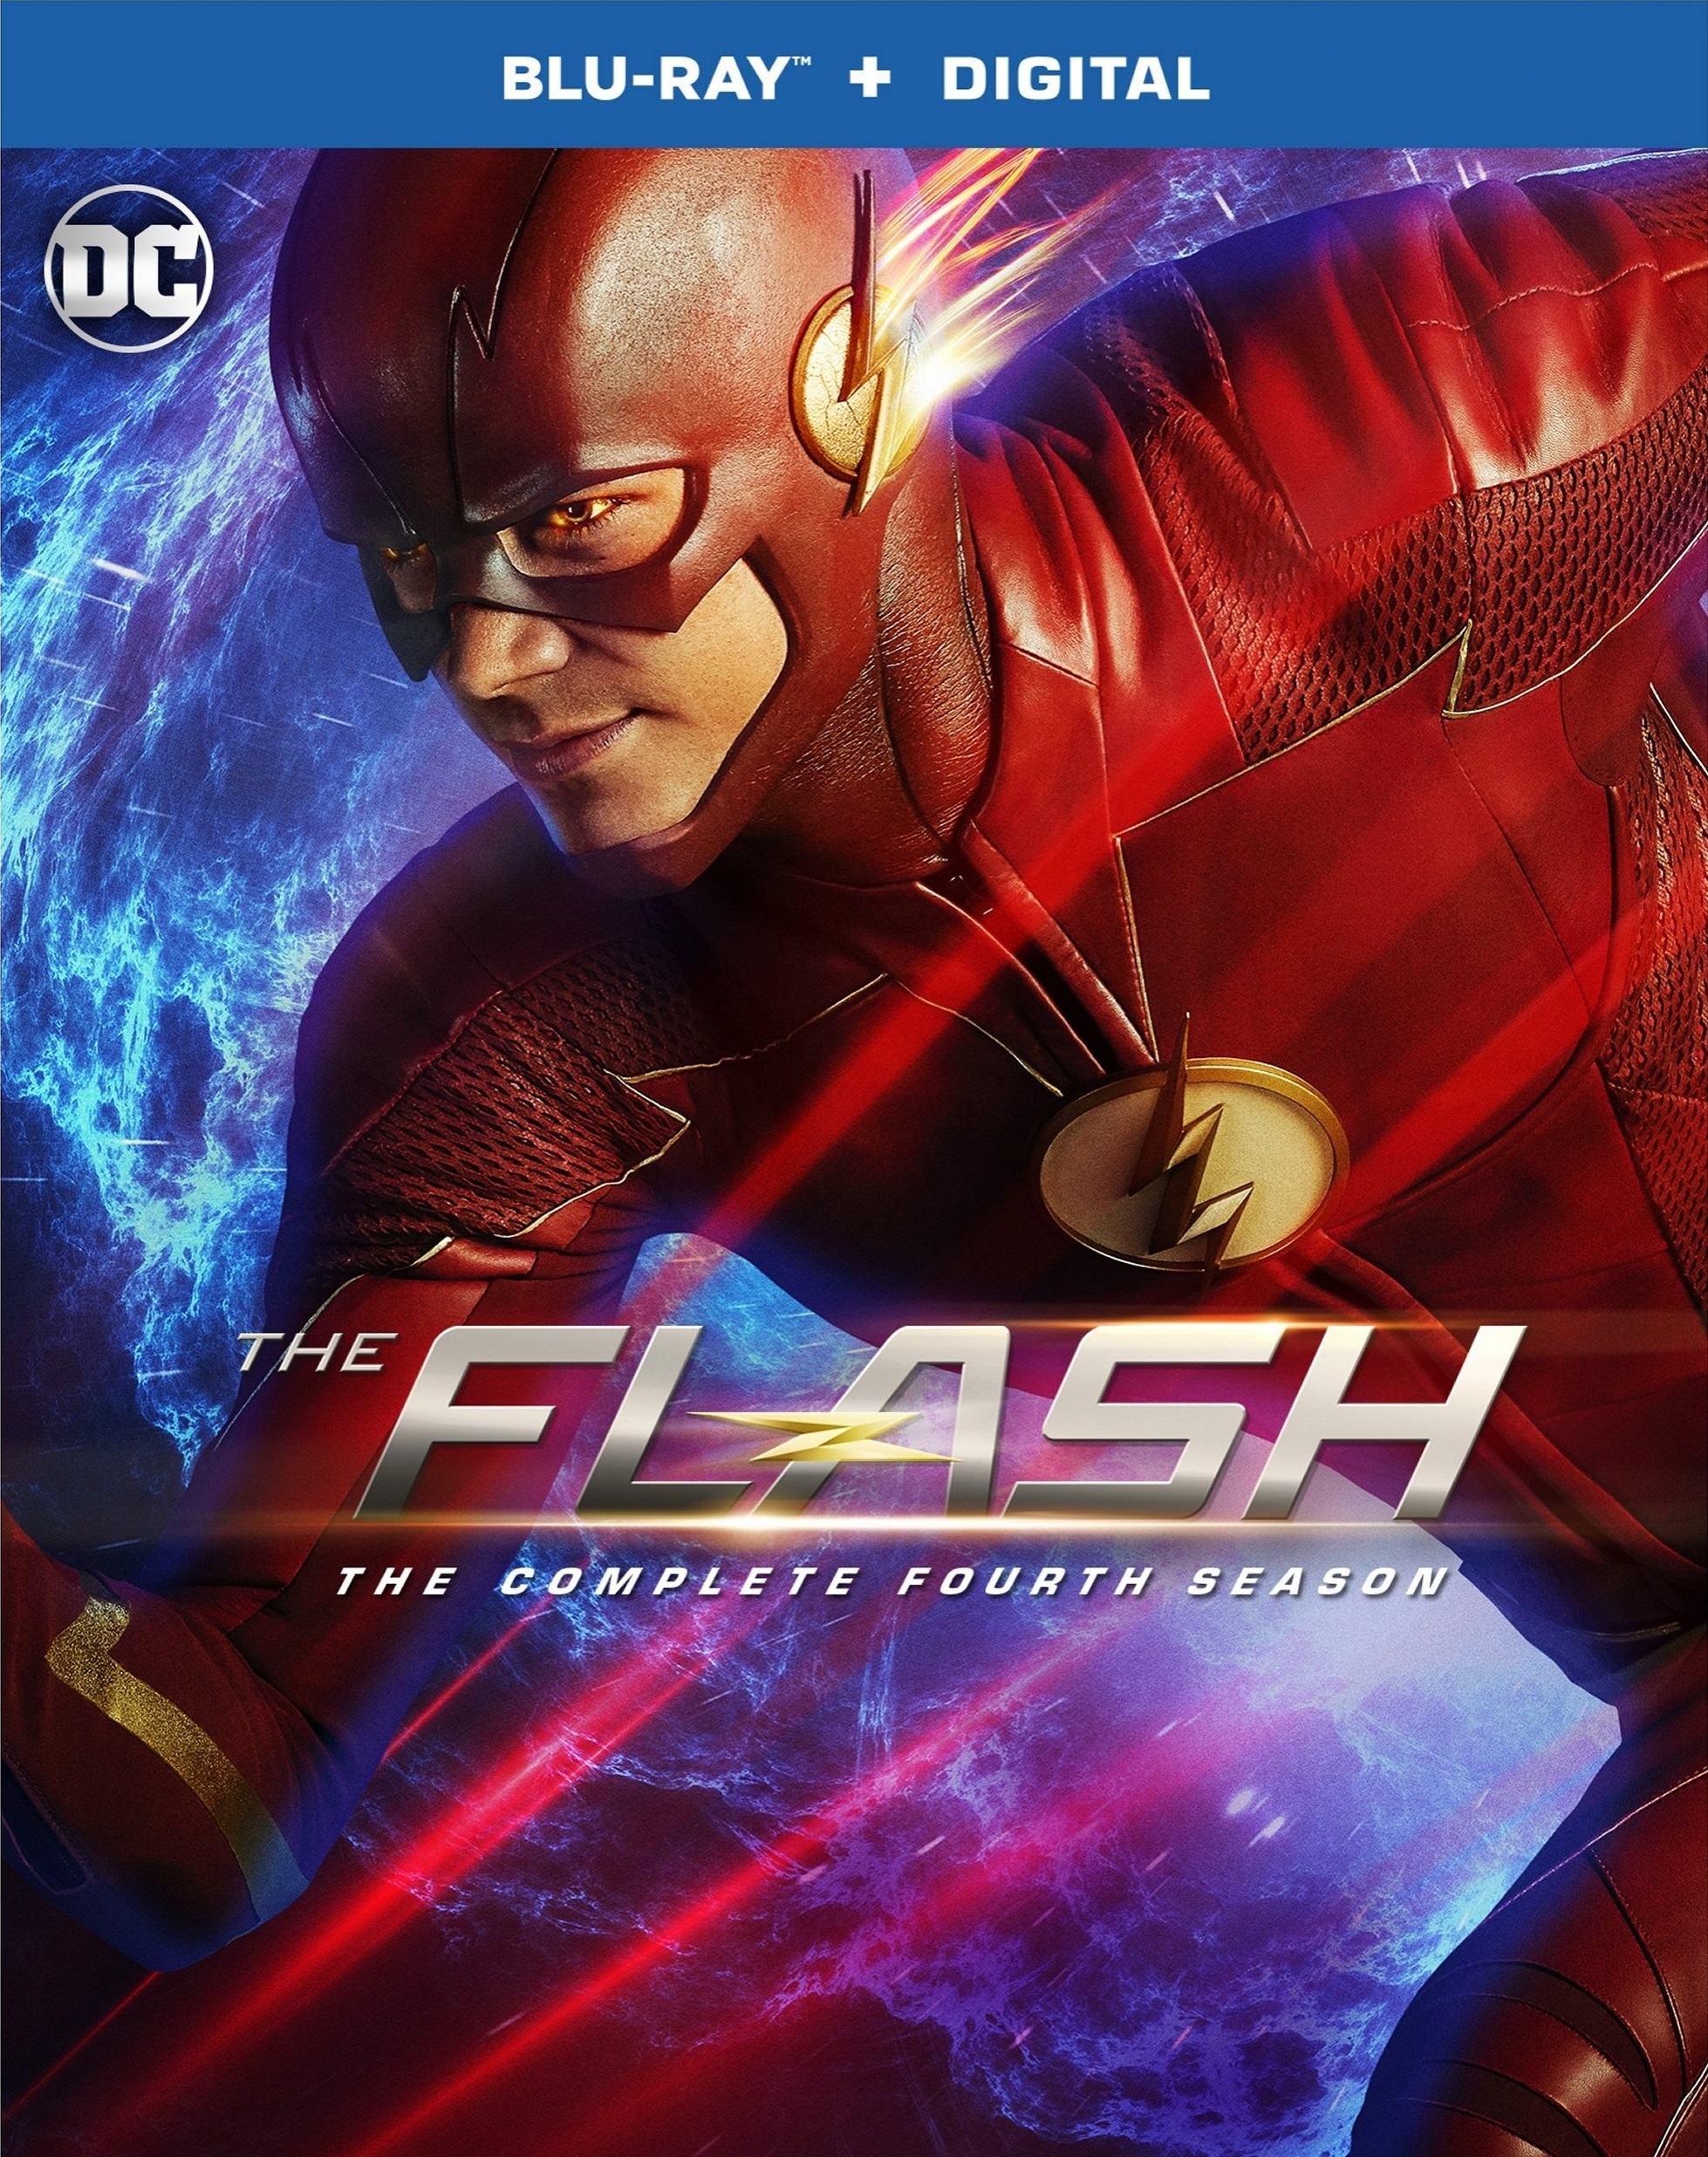 The Flash The Complete Fourth Season BluRay fílmico